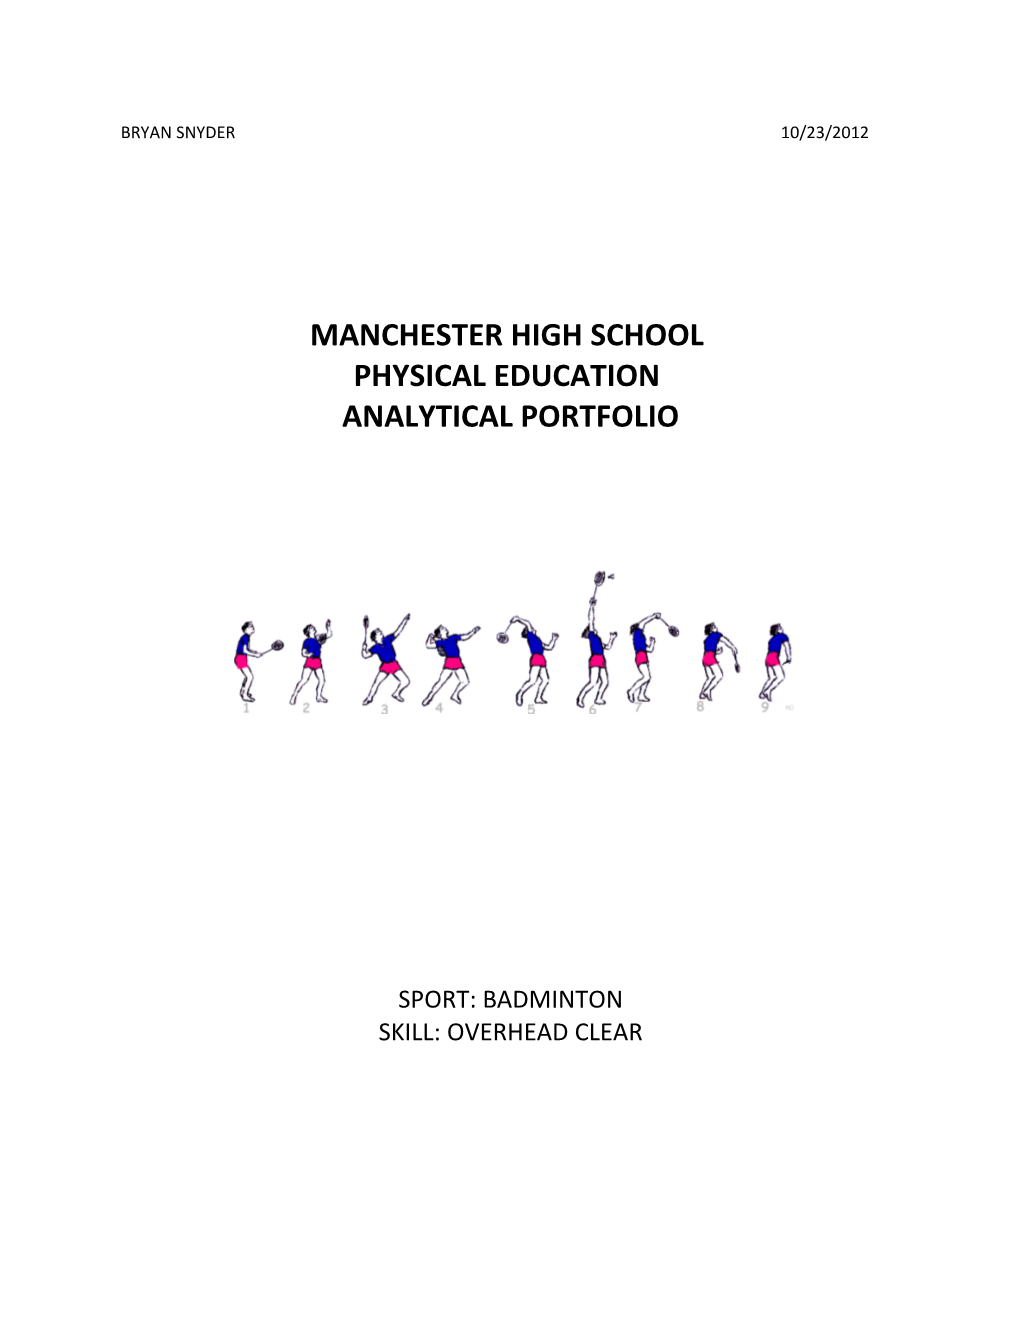 Manchester High School Physical Education Analytical Portfolio